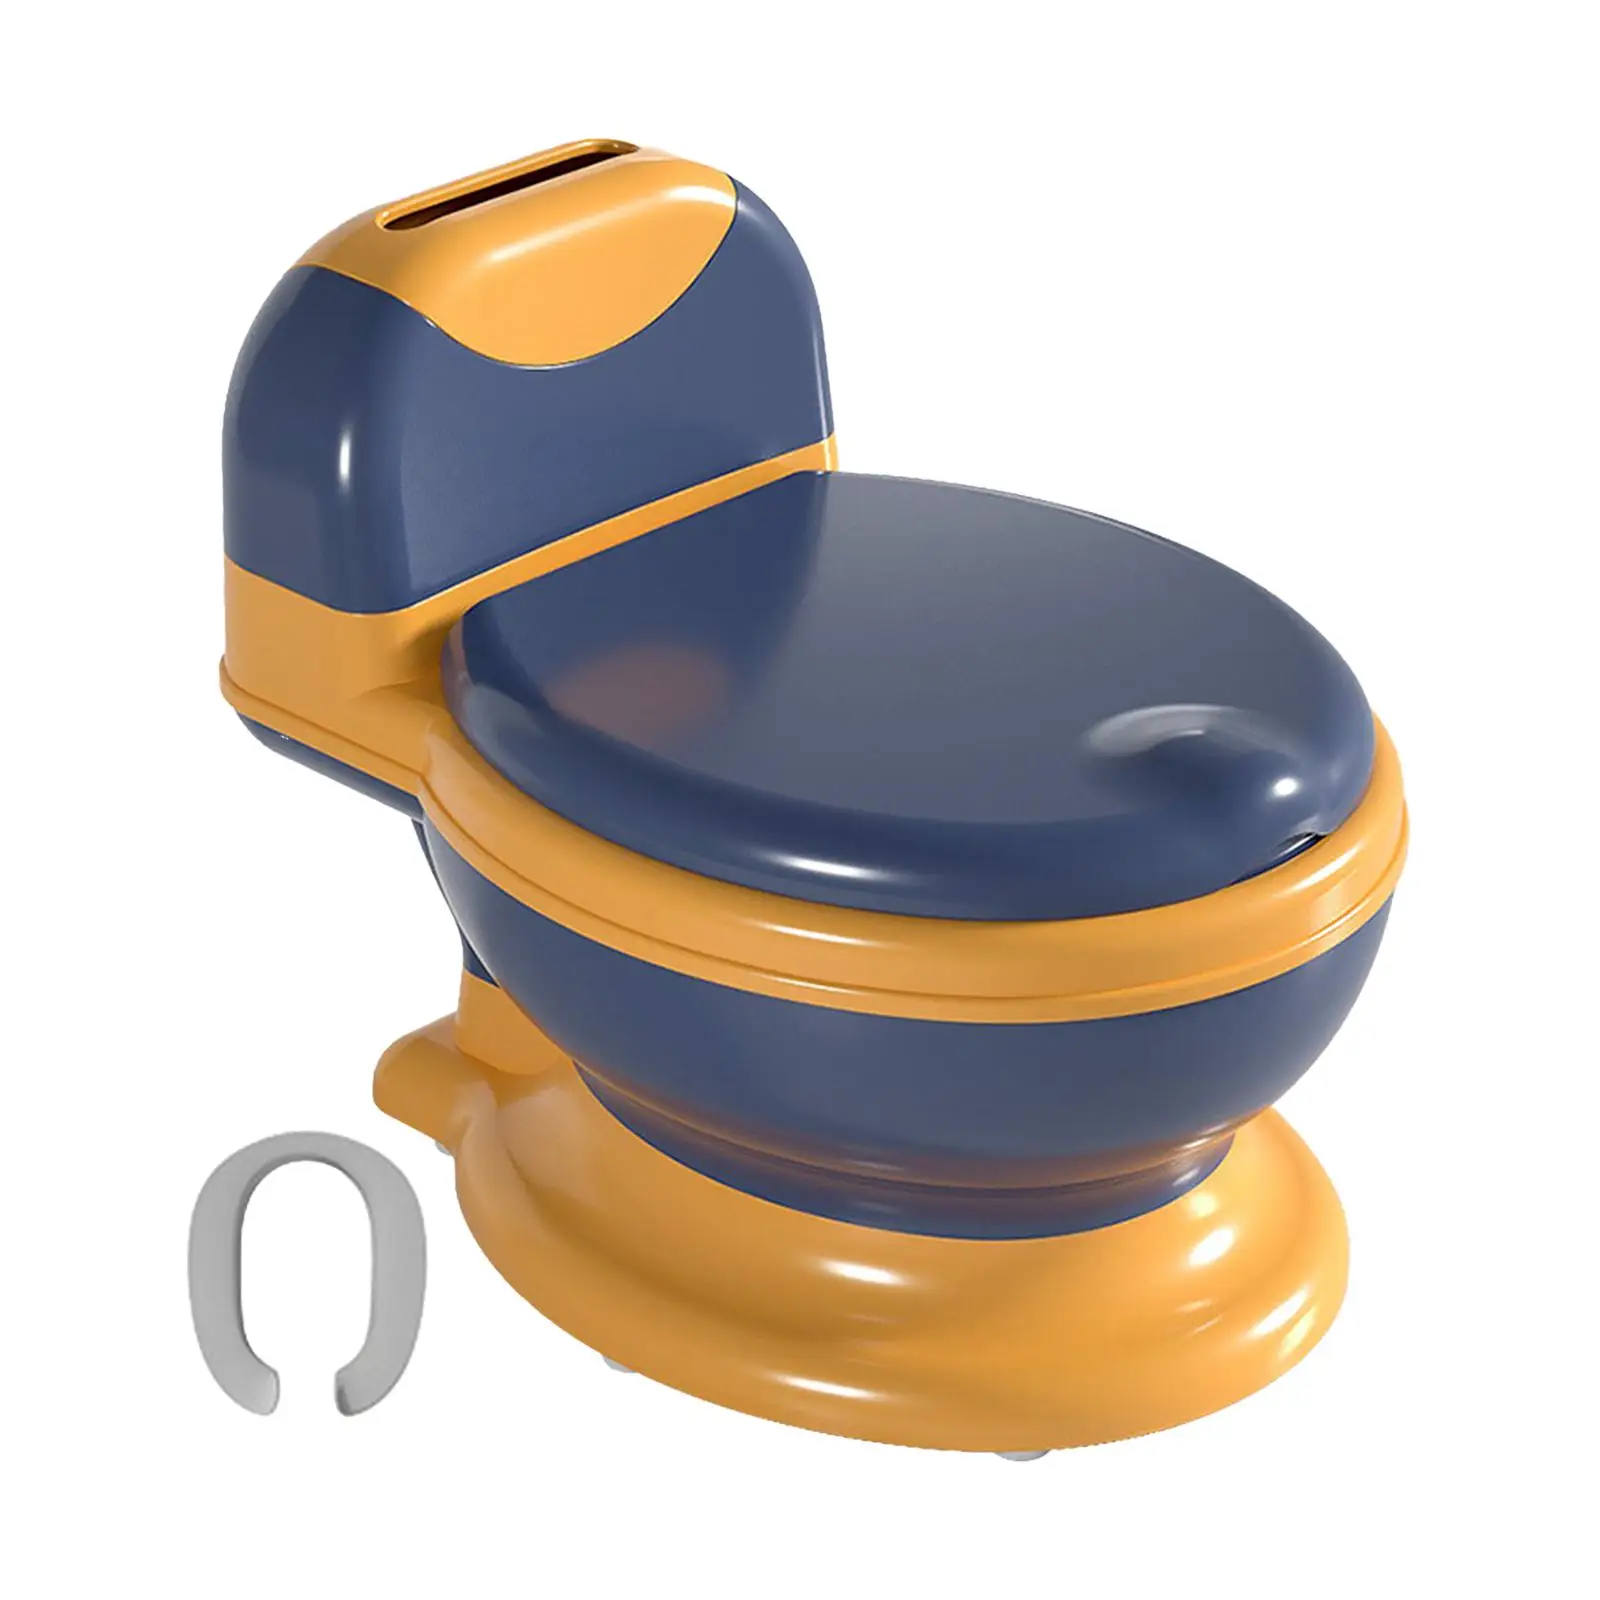 Potty Train Toilet Comfortable Toilet Training Seat Potty Seat Detachable Realistic Toilet for Boys Girls Baby Children Kids